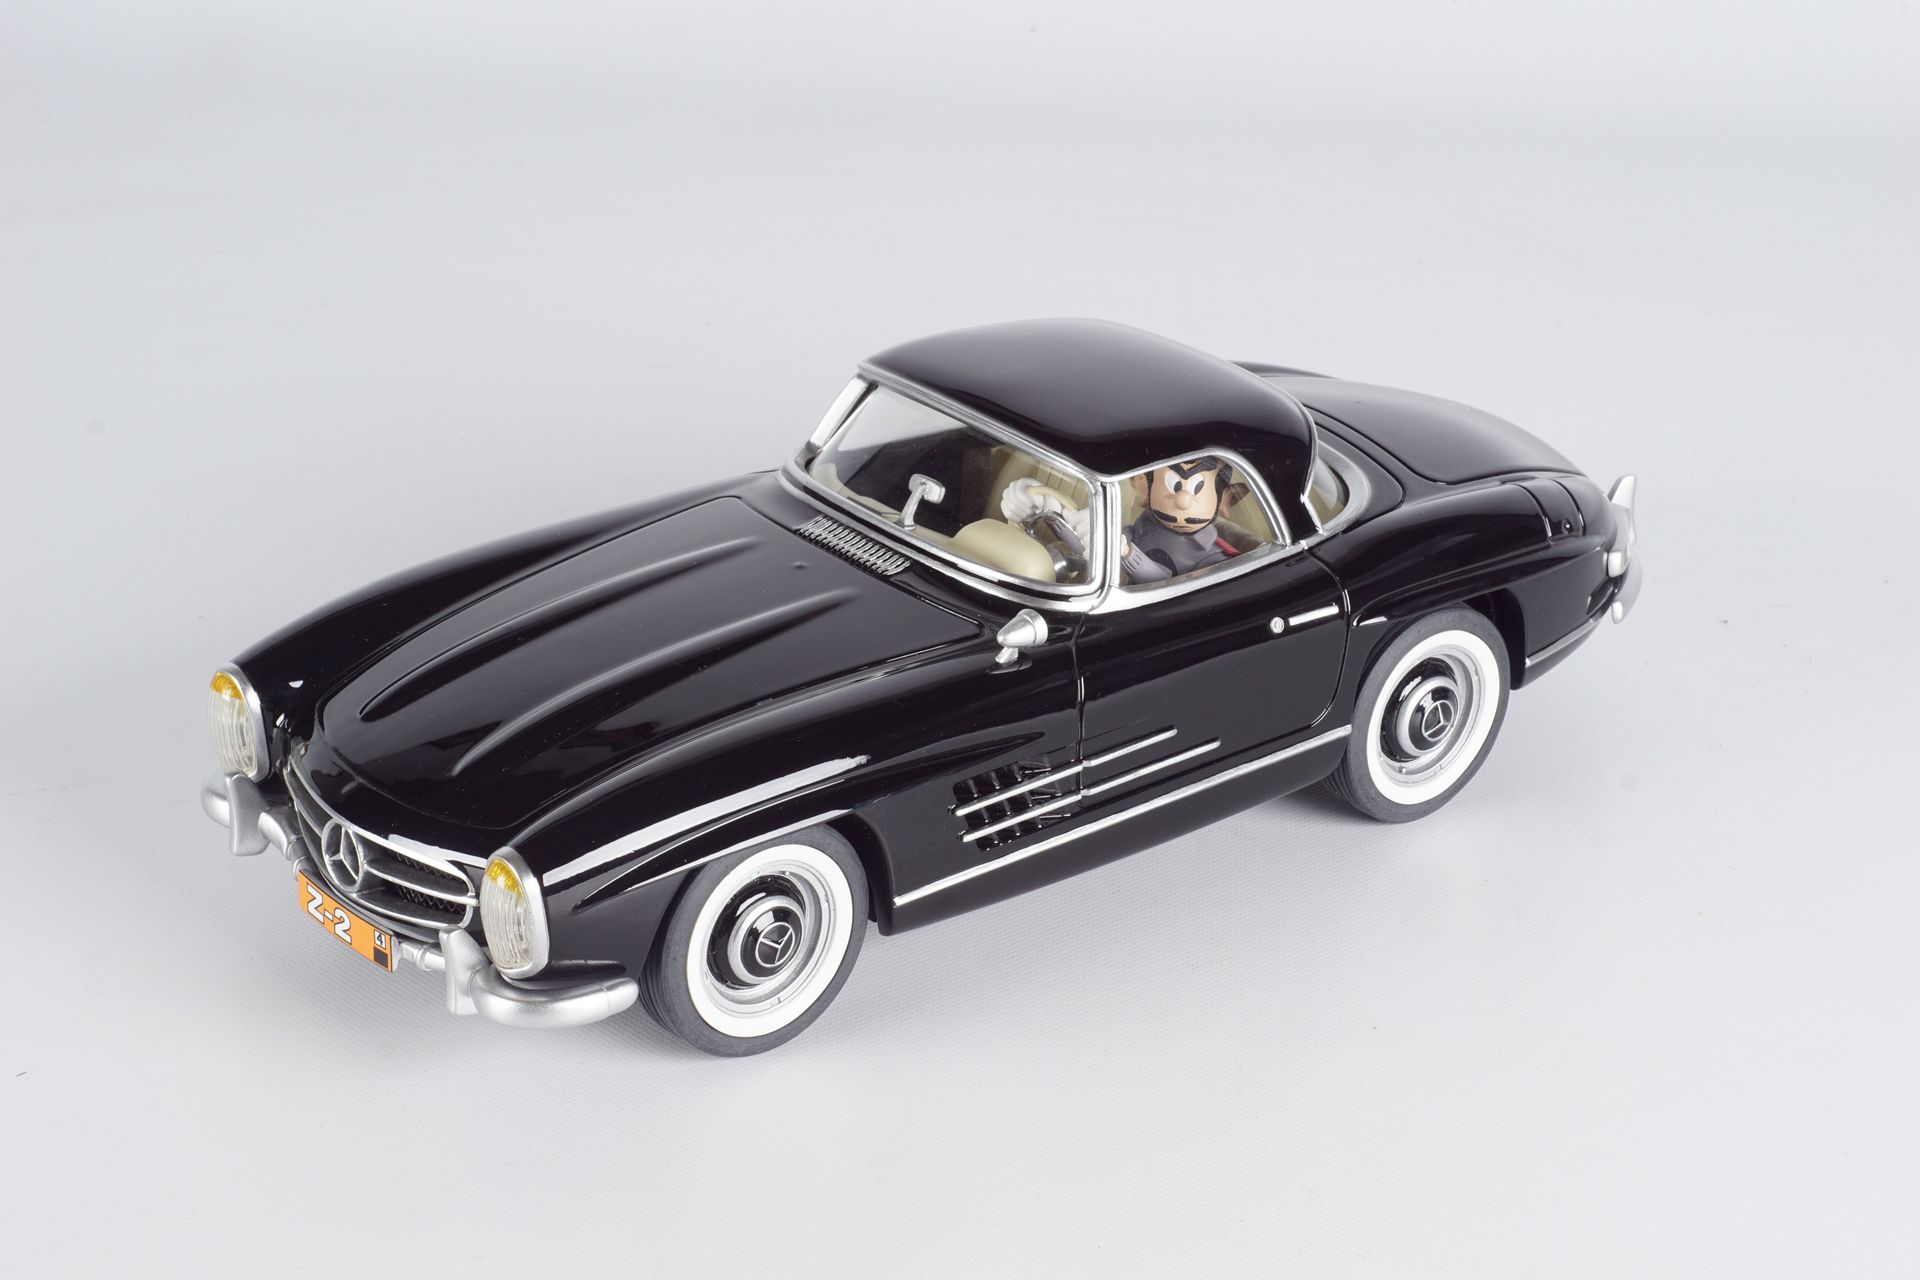 FRANQUIN, André (1924-1997) Figures and you, Franquin's garage, The Mercedes 300&hellip;